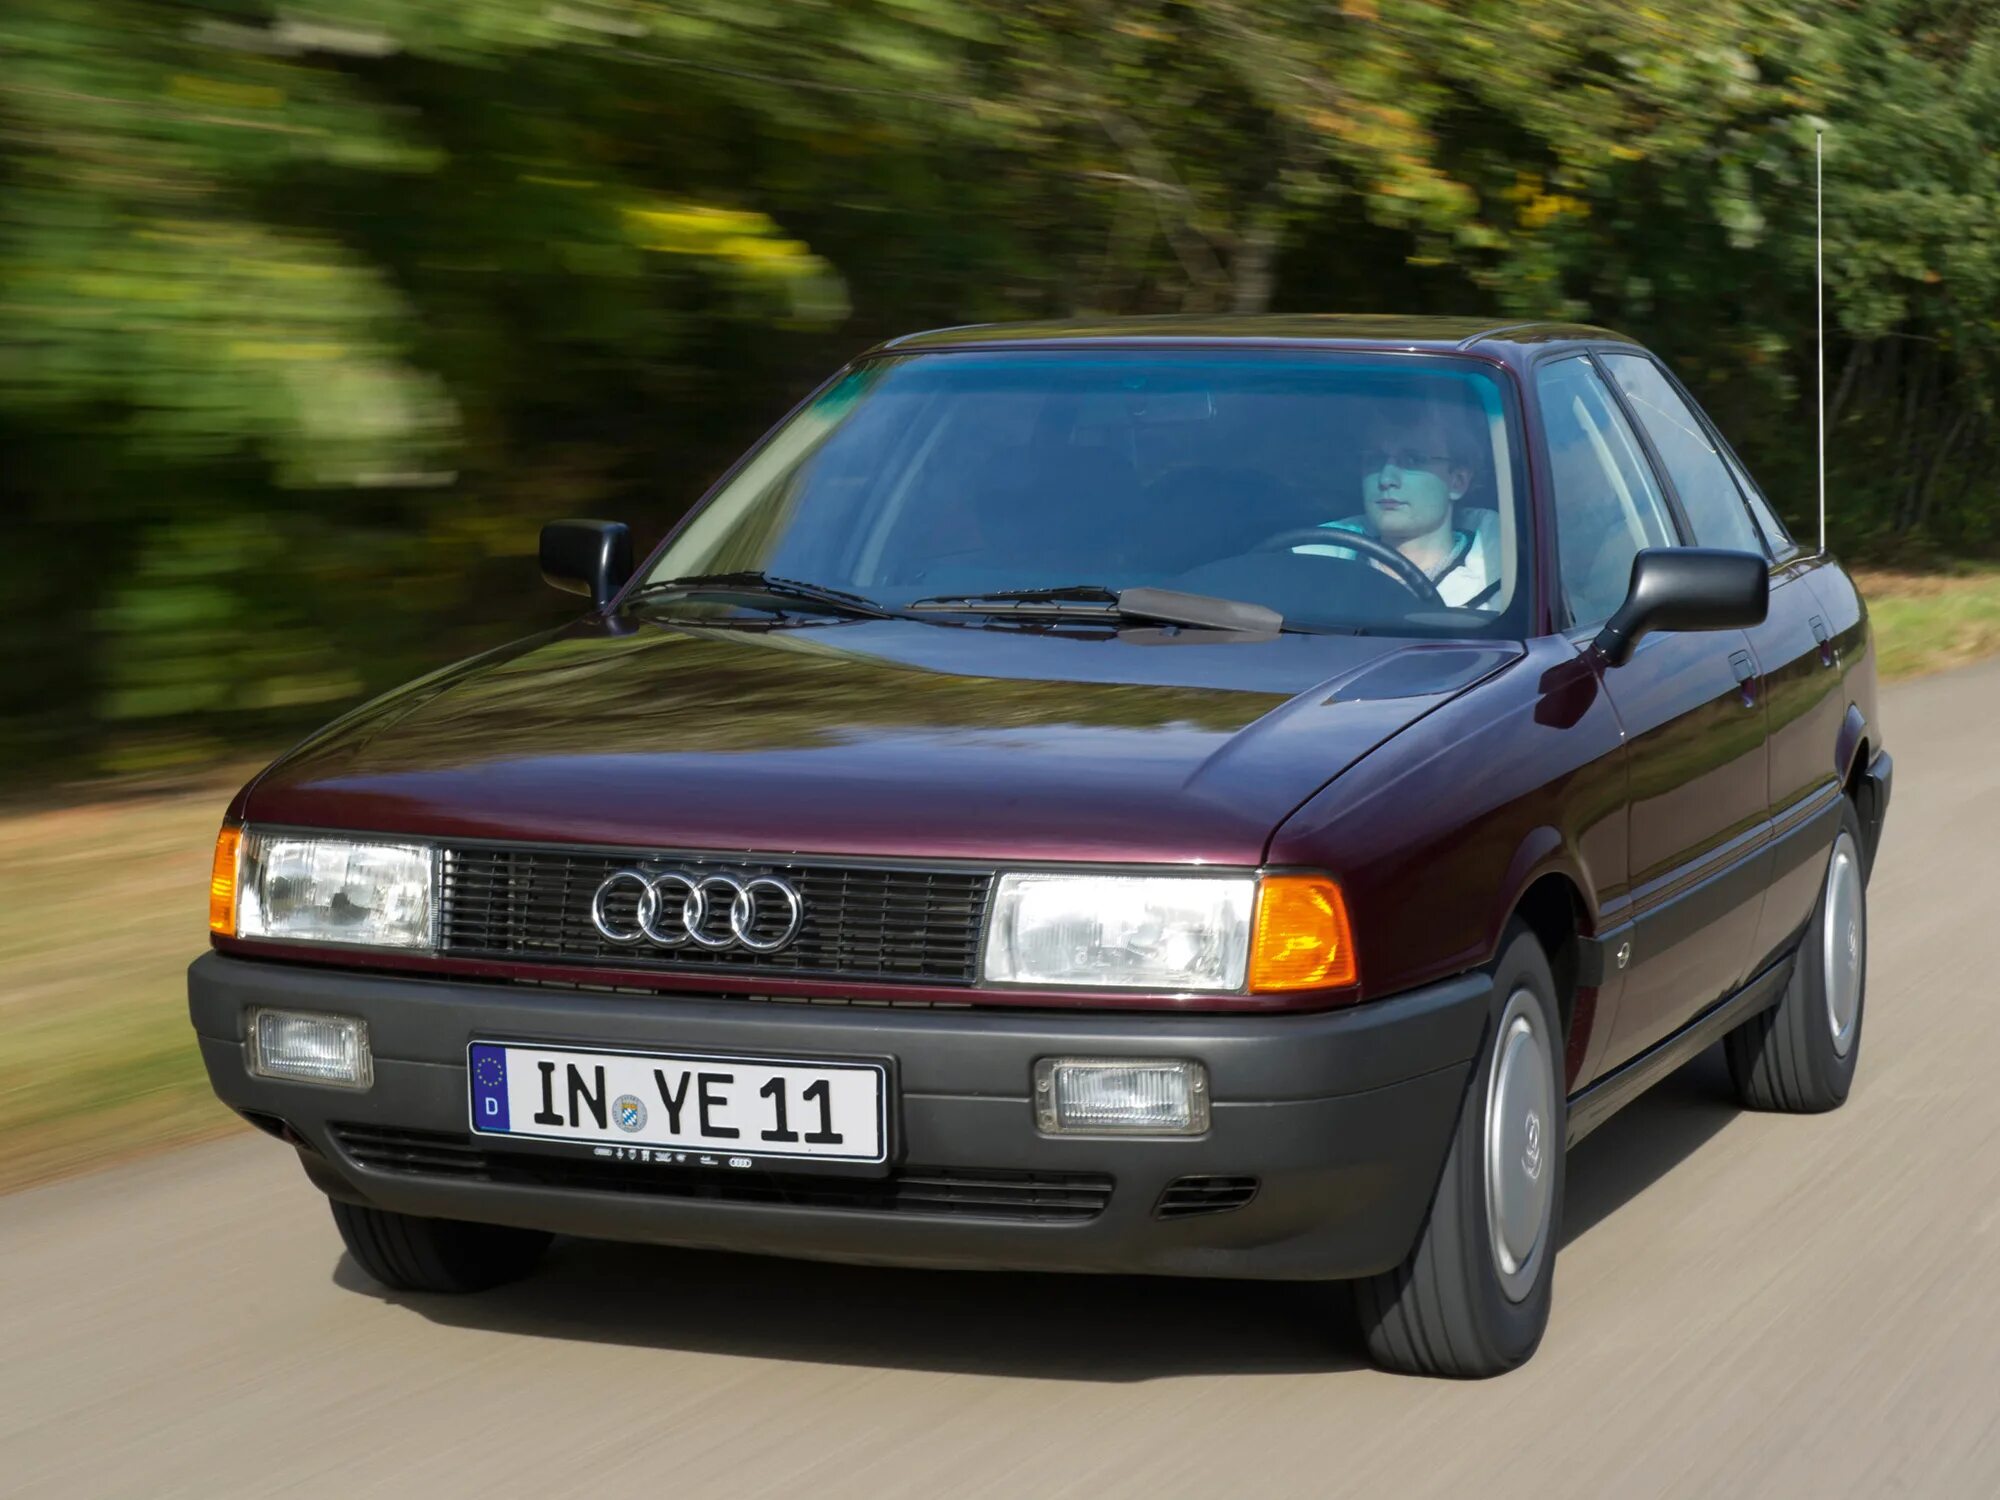 Audi 80 b4. Ауди 80 б3. Ауди 80 b3 1990. Ауди 80 b3 quattro. Ау 8